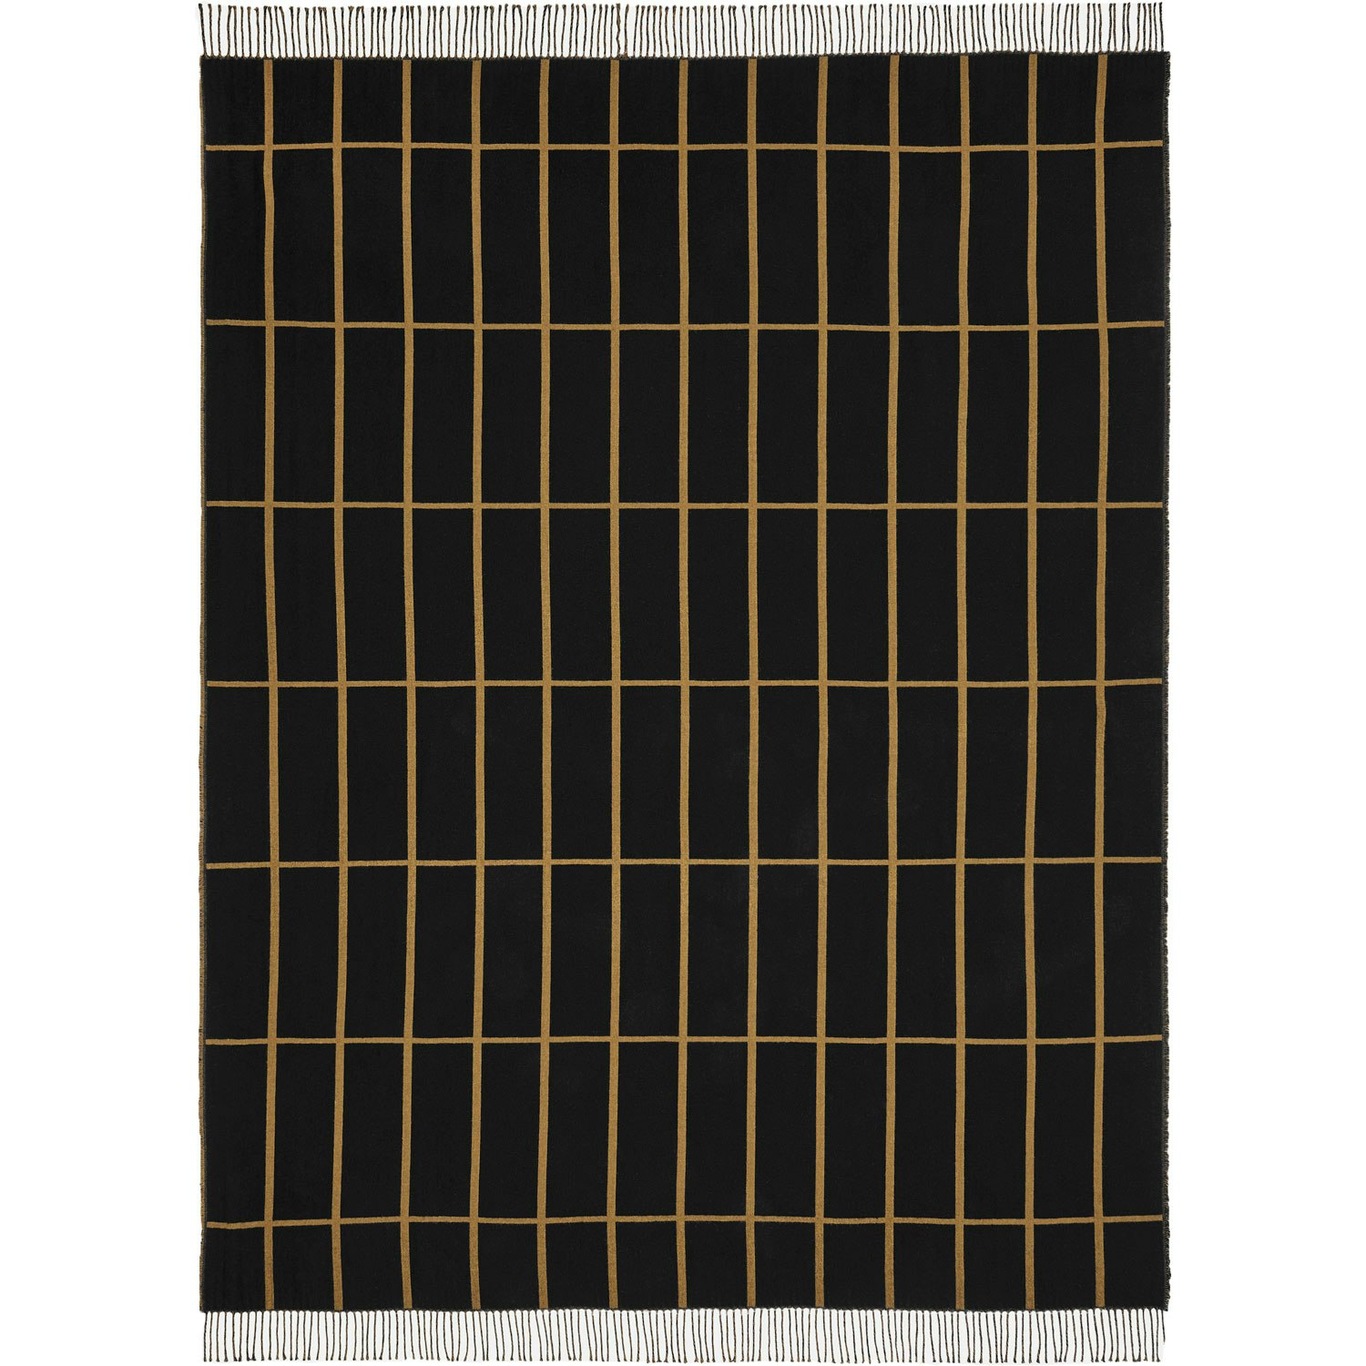 Tiiliskivi Plaid 140x180 cm, Guld / Caviar